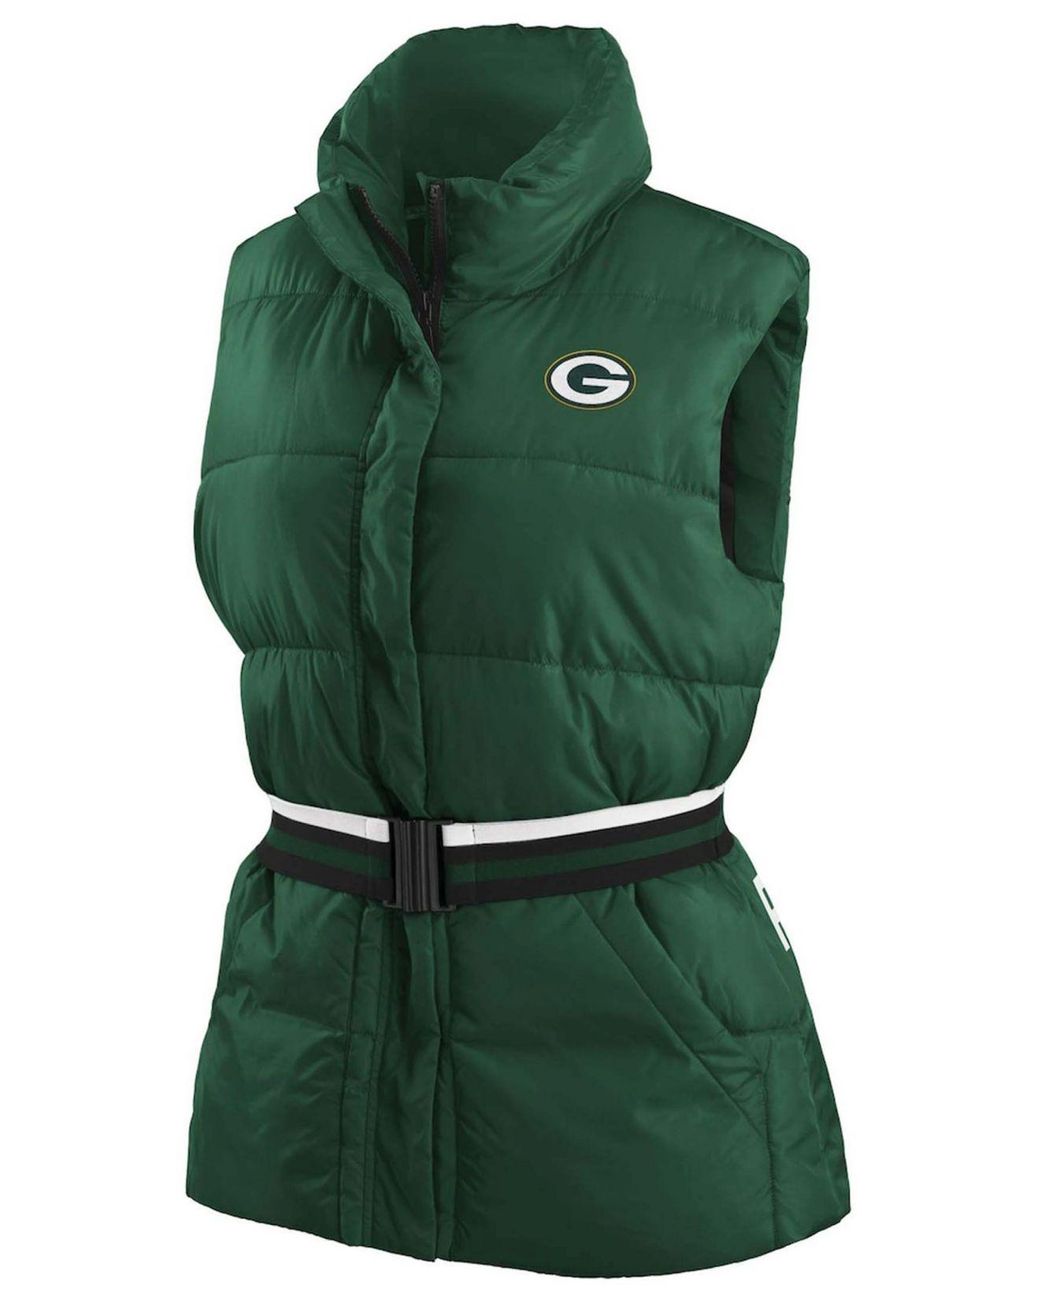 Green Bay Packers Womens Erin Andrews Polar Fleece Jacket at the